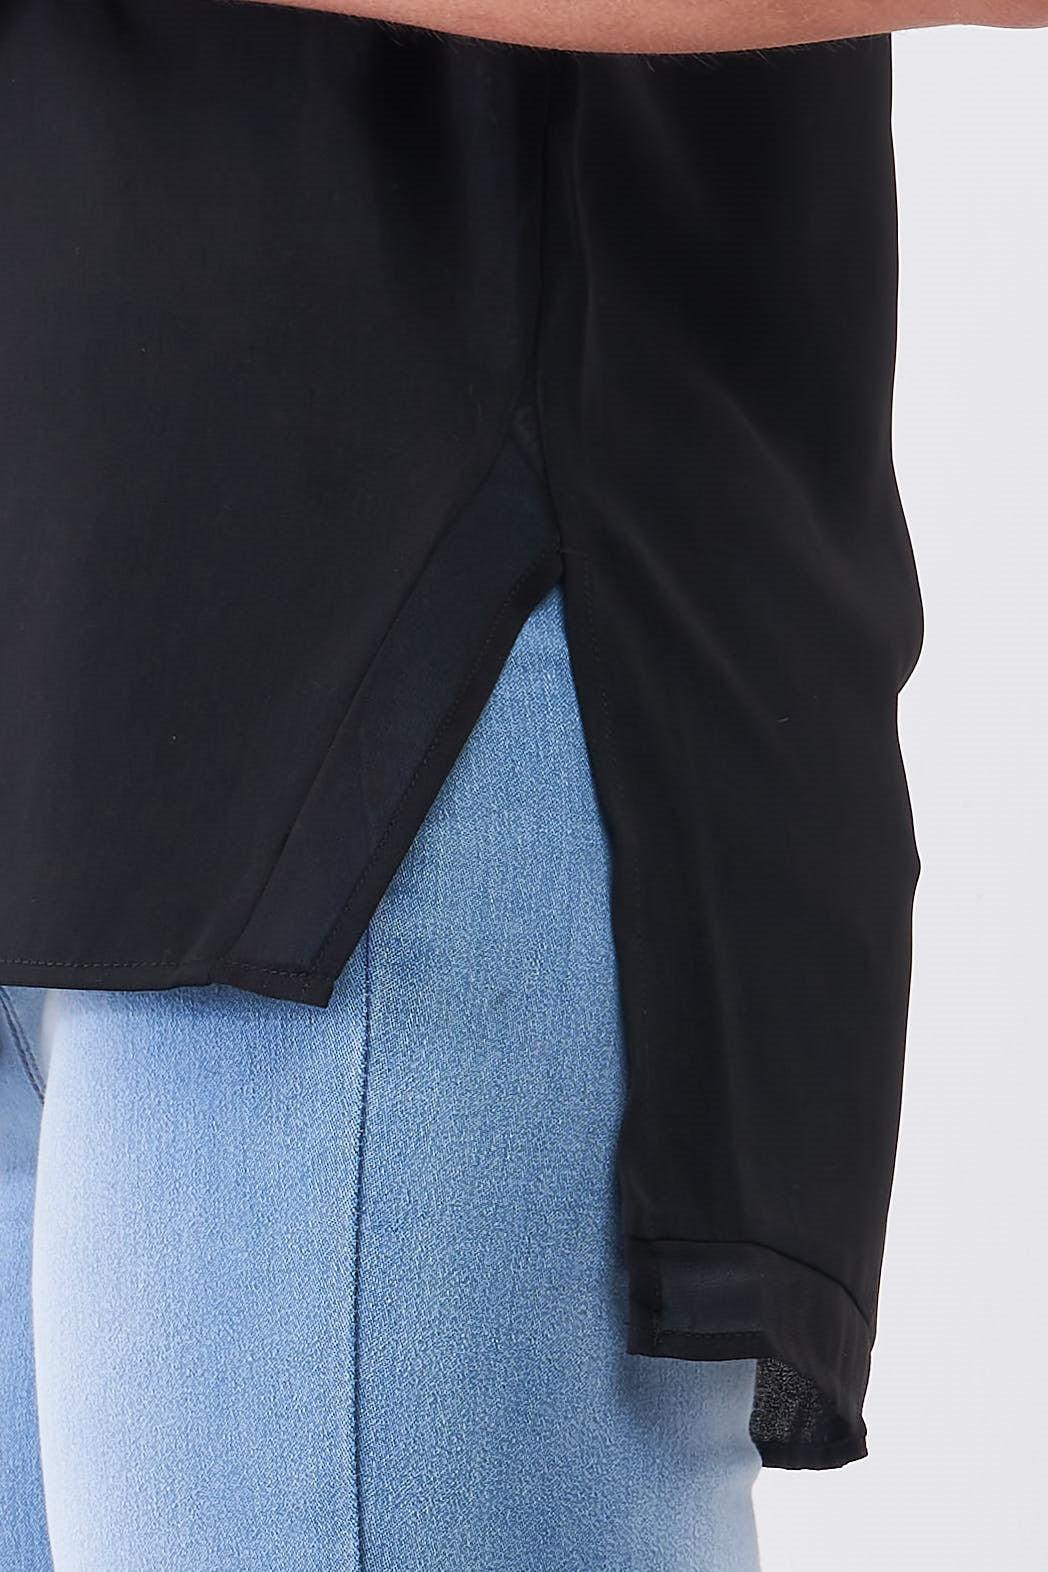 Black Short Sleeve Round Neck Loose Fit Two Side Split T-Short Top